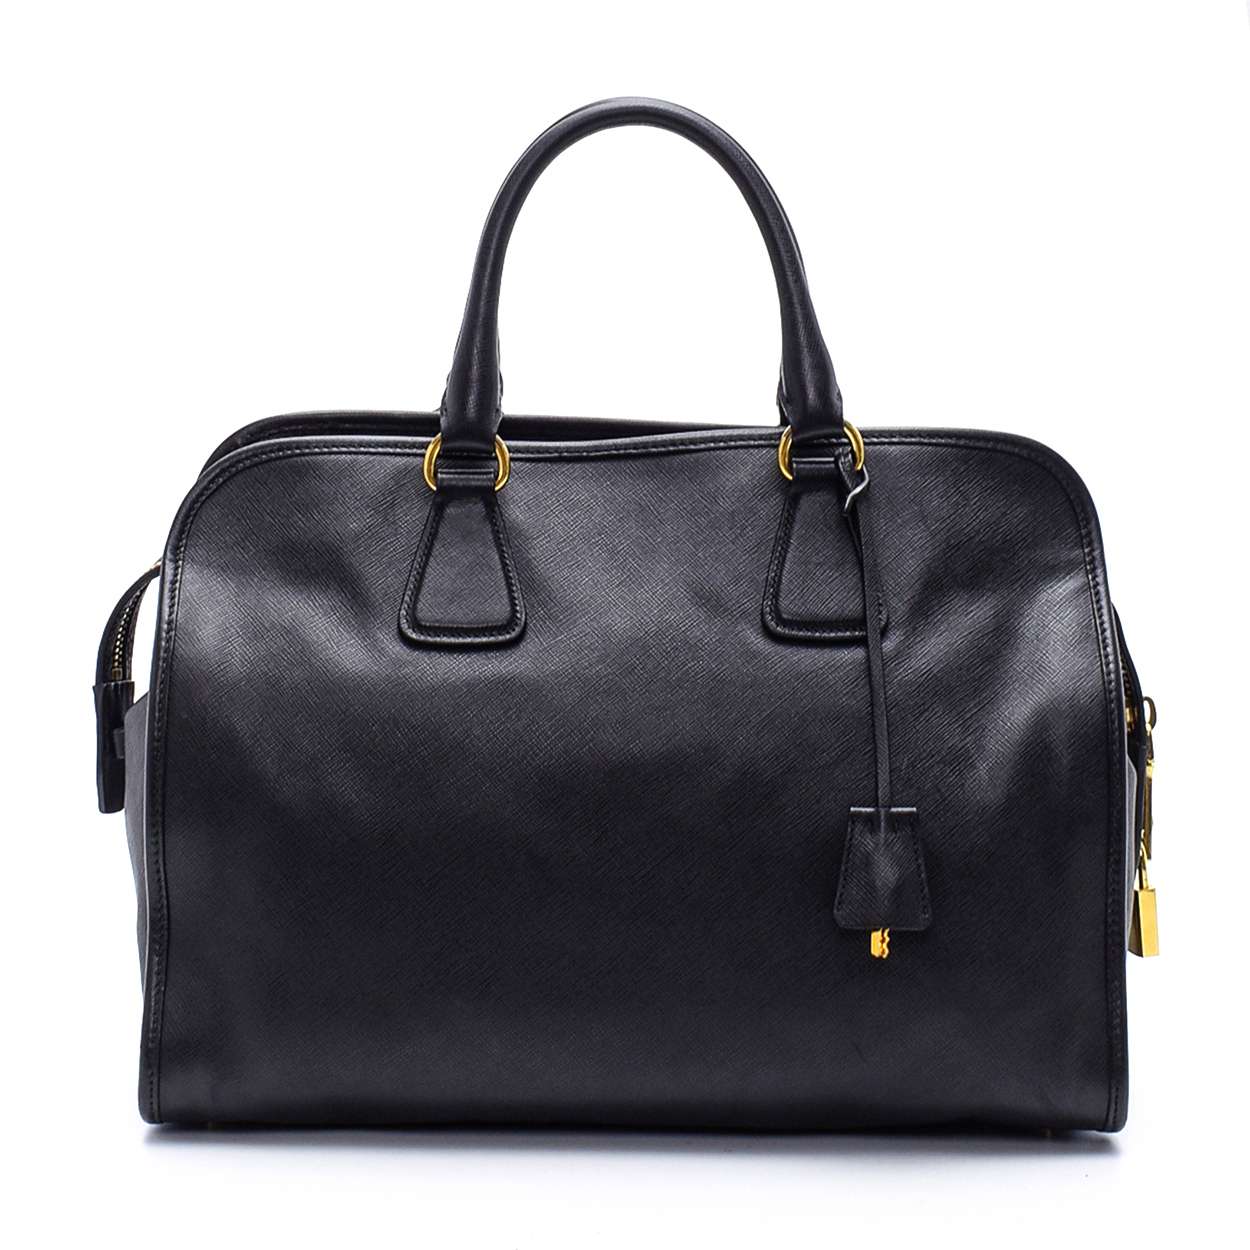 Prada - Black Saffiano Leather Handbag 